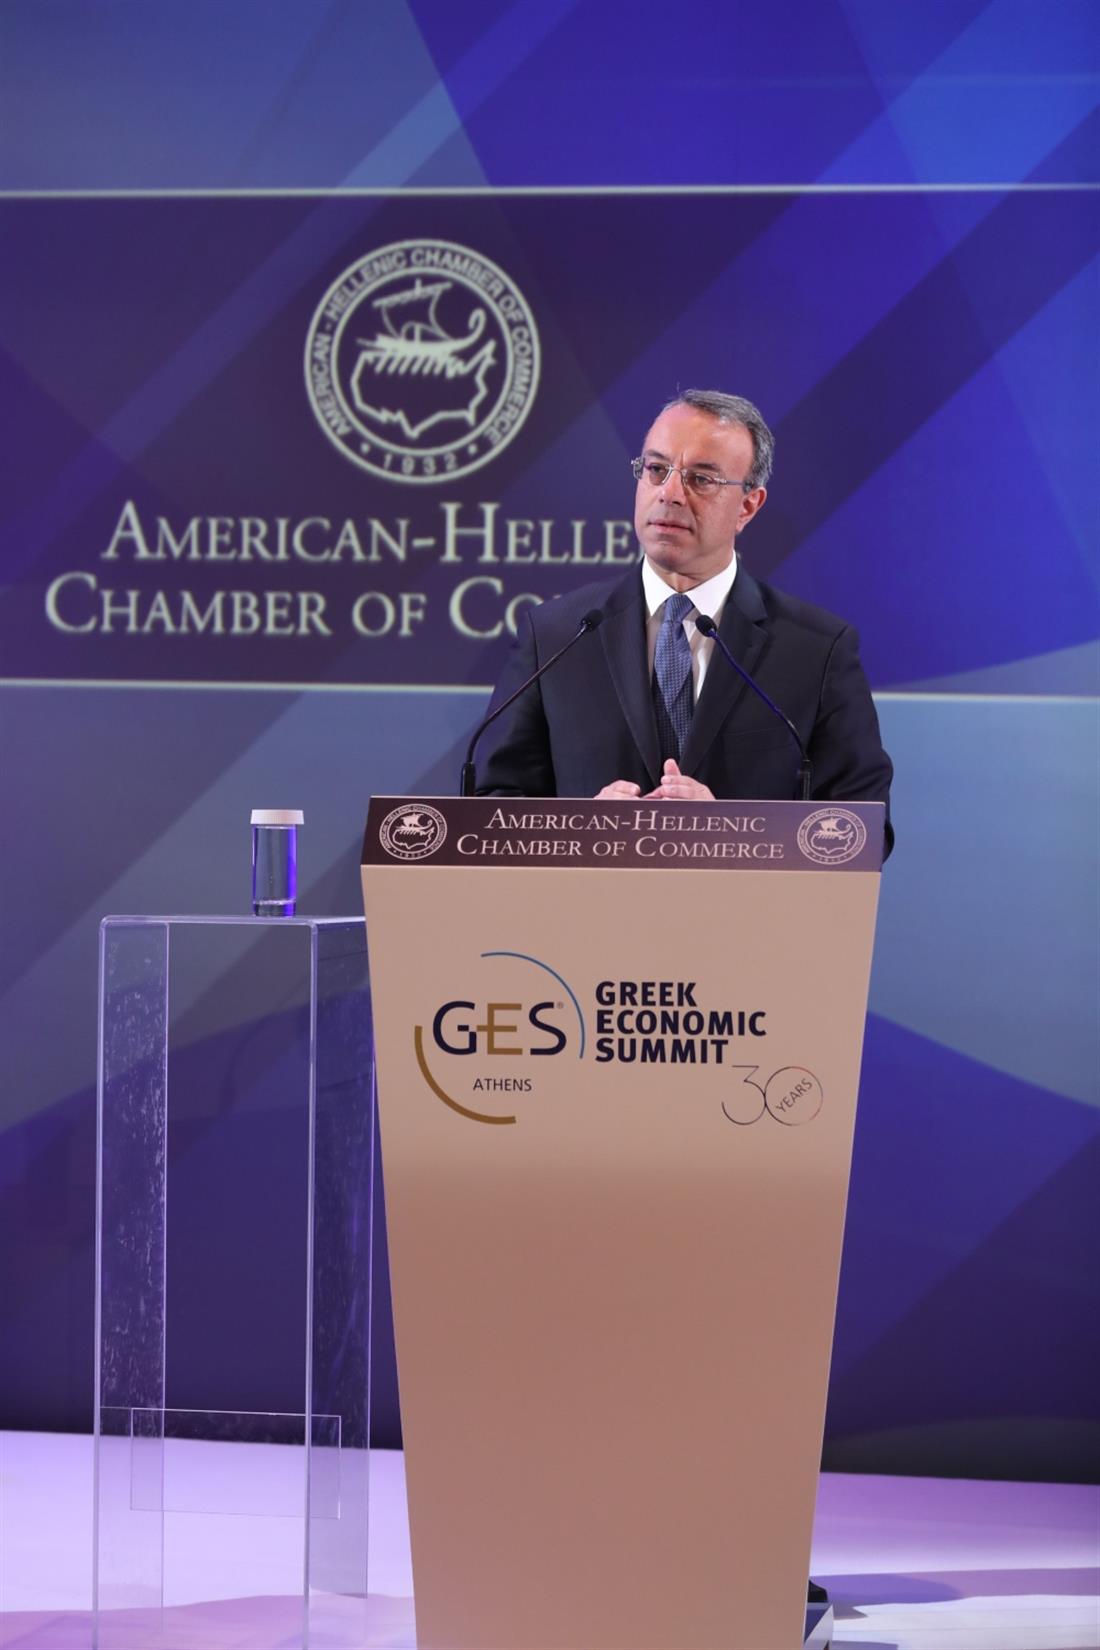 Annual Greek Economic Summit - Η Ελληνική Οικονομία αλλάζει τα δεδομένα - Ελληνοαμερικανικο Εμπορικό Επιμελητήριο